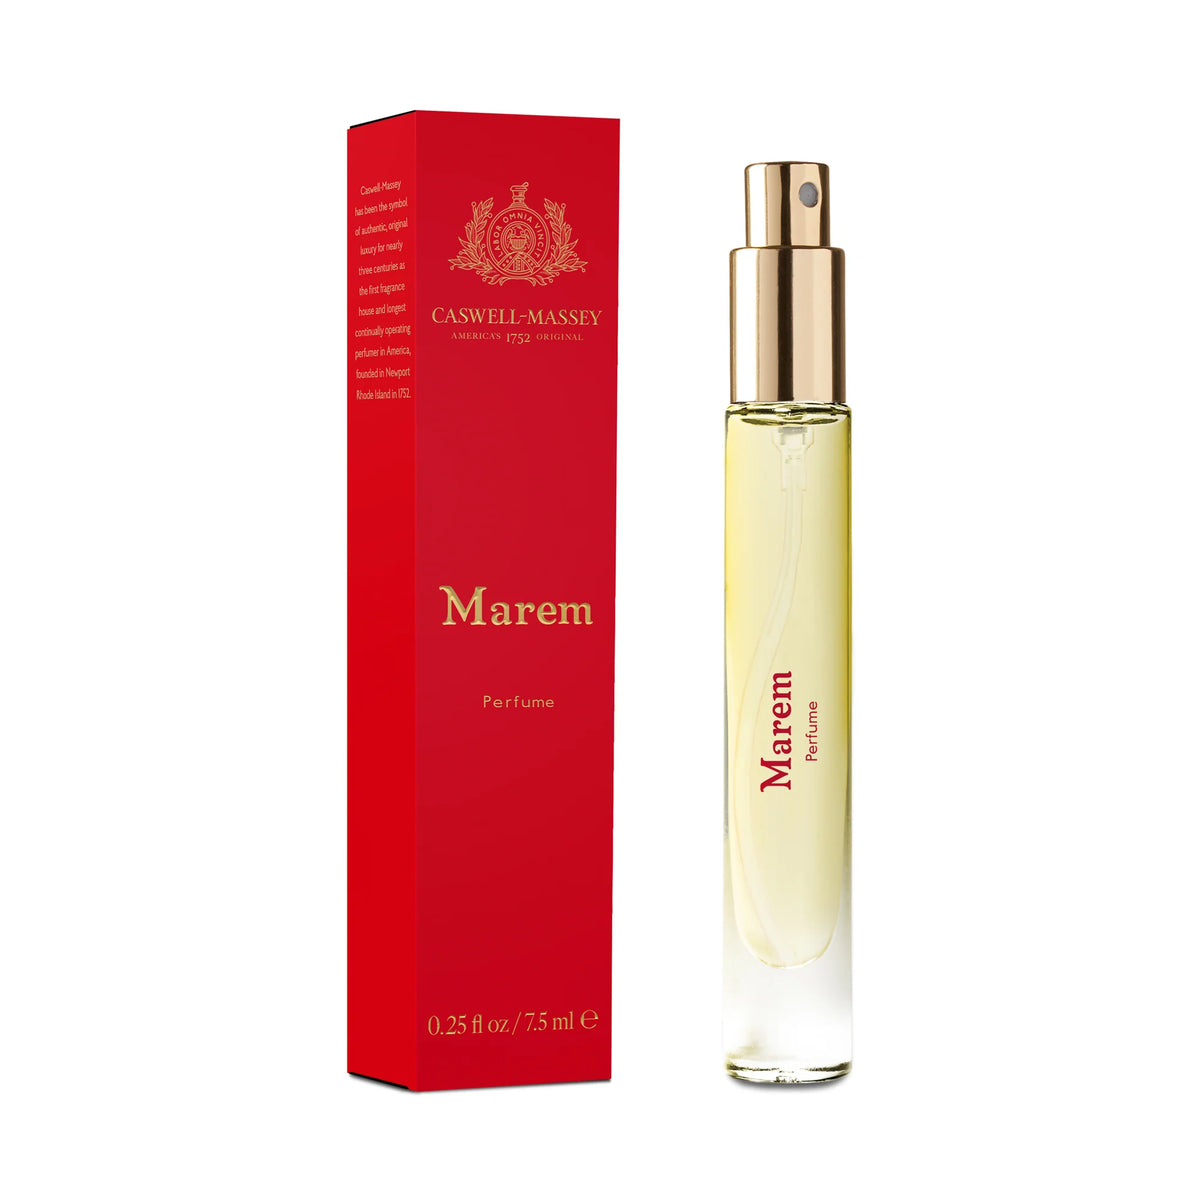 Caswell - Massey Marem Perfume 7.5ml